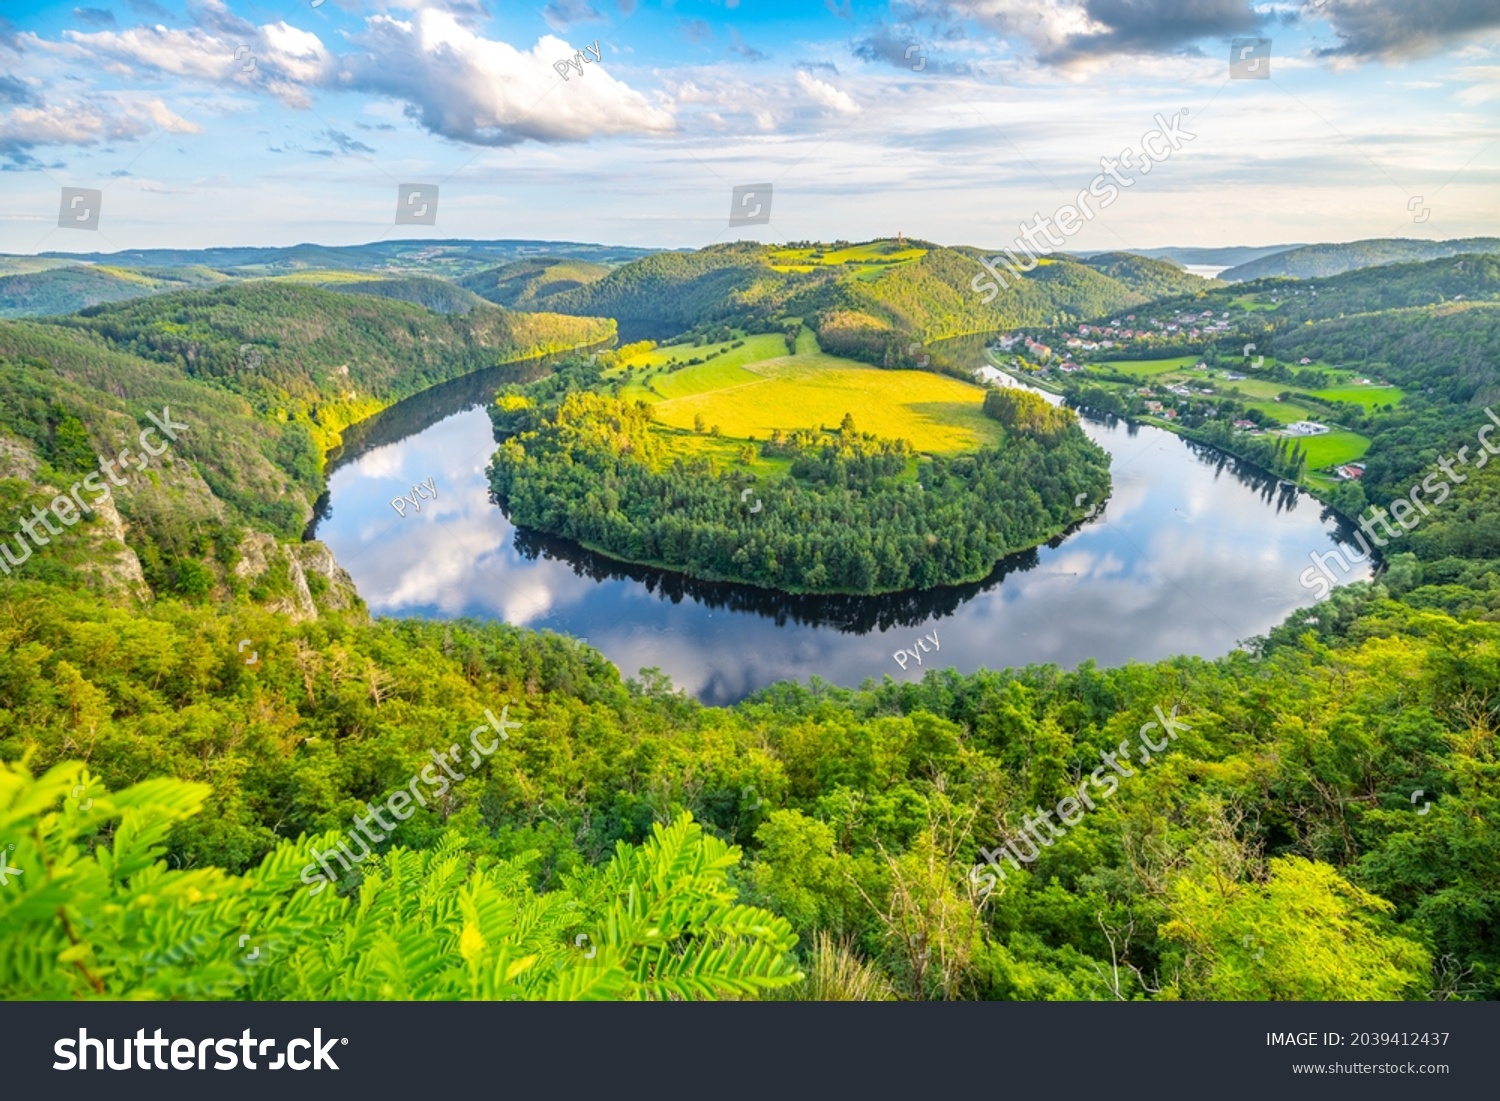 3,492 Moldau river Images, Stock Photos & Vectors | Shutterstock